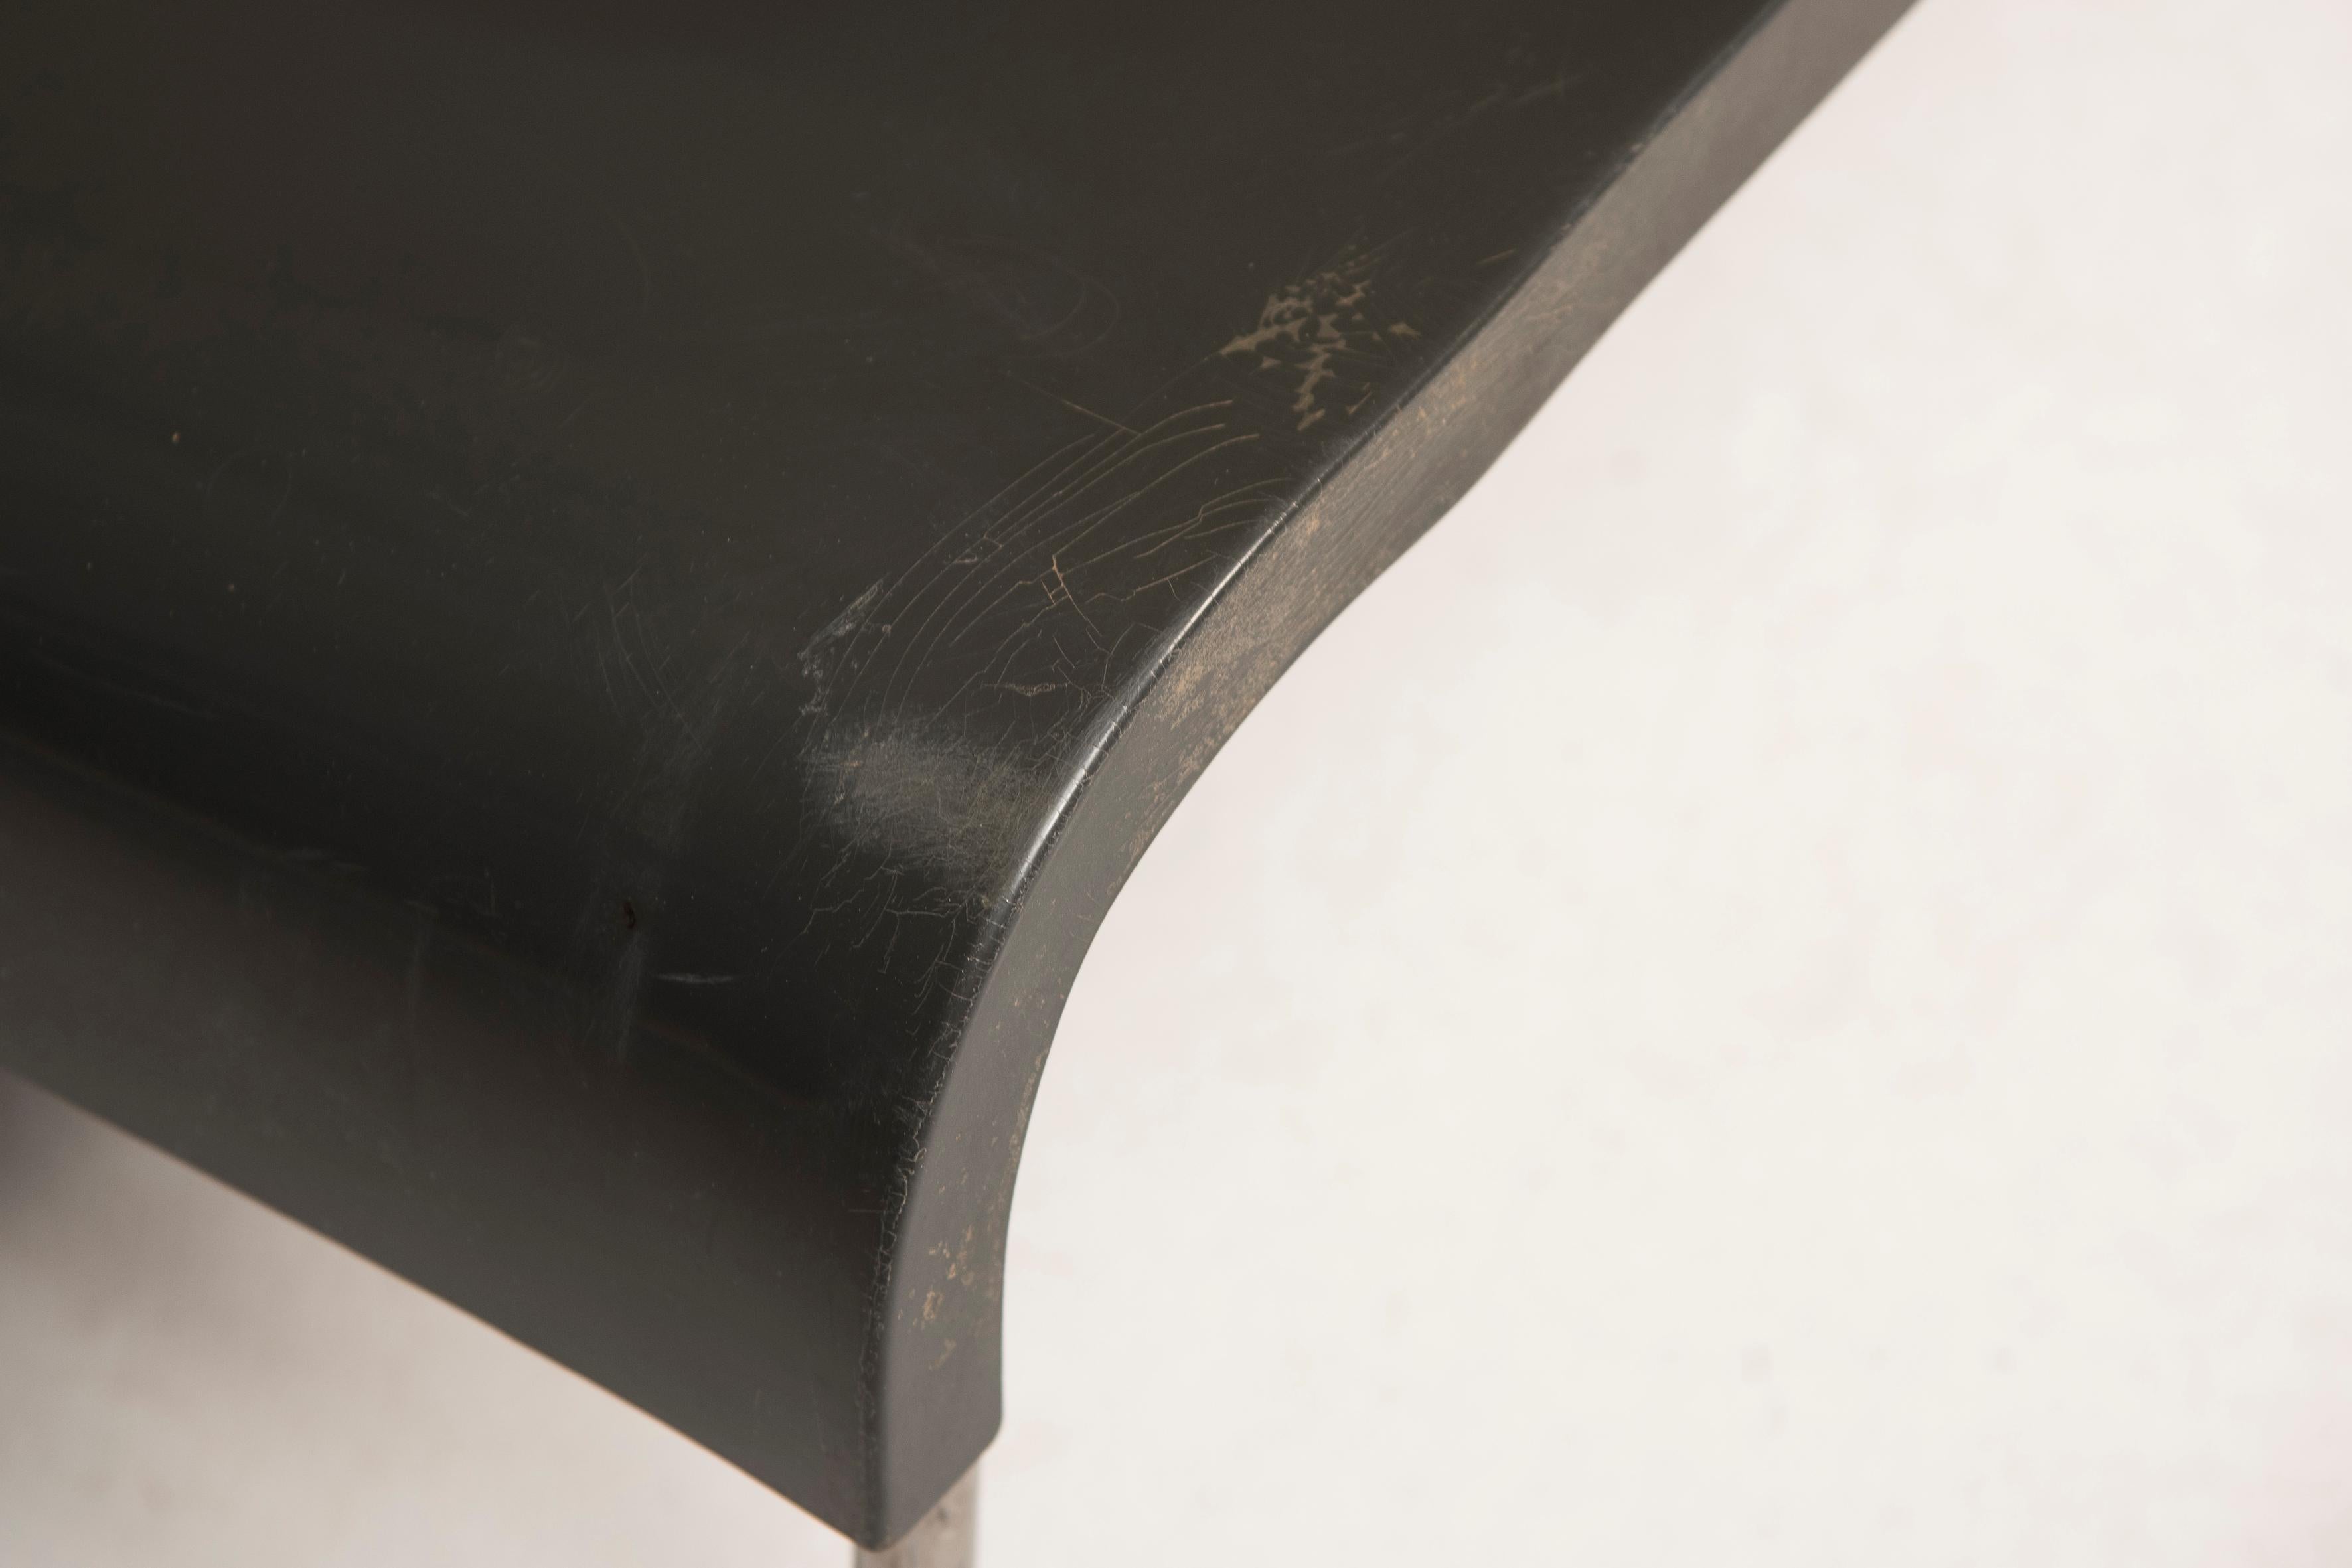 Modern Black Kartell Form Design by Piero Lissoni Steel legs Outdoor Indoor Chairs